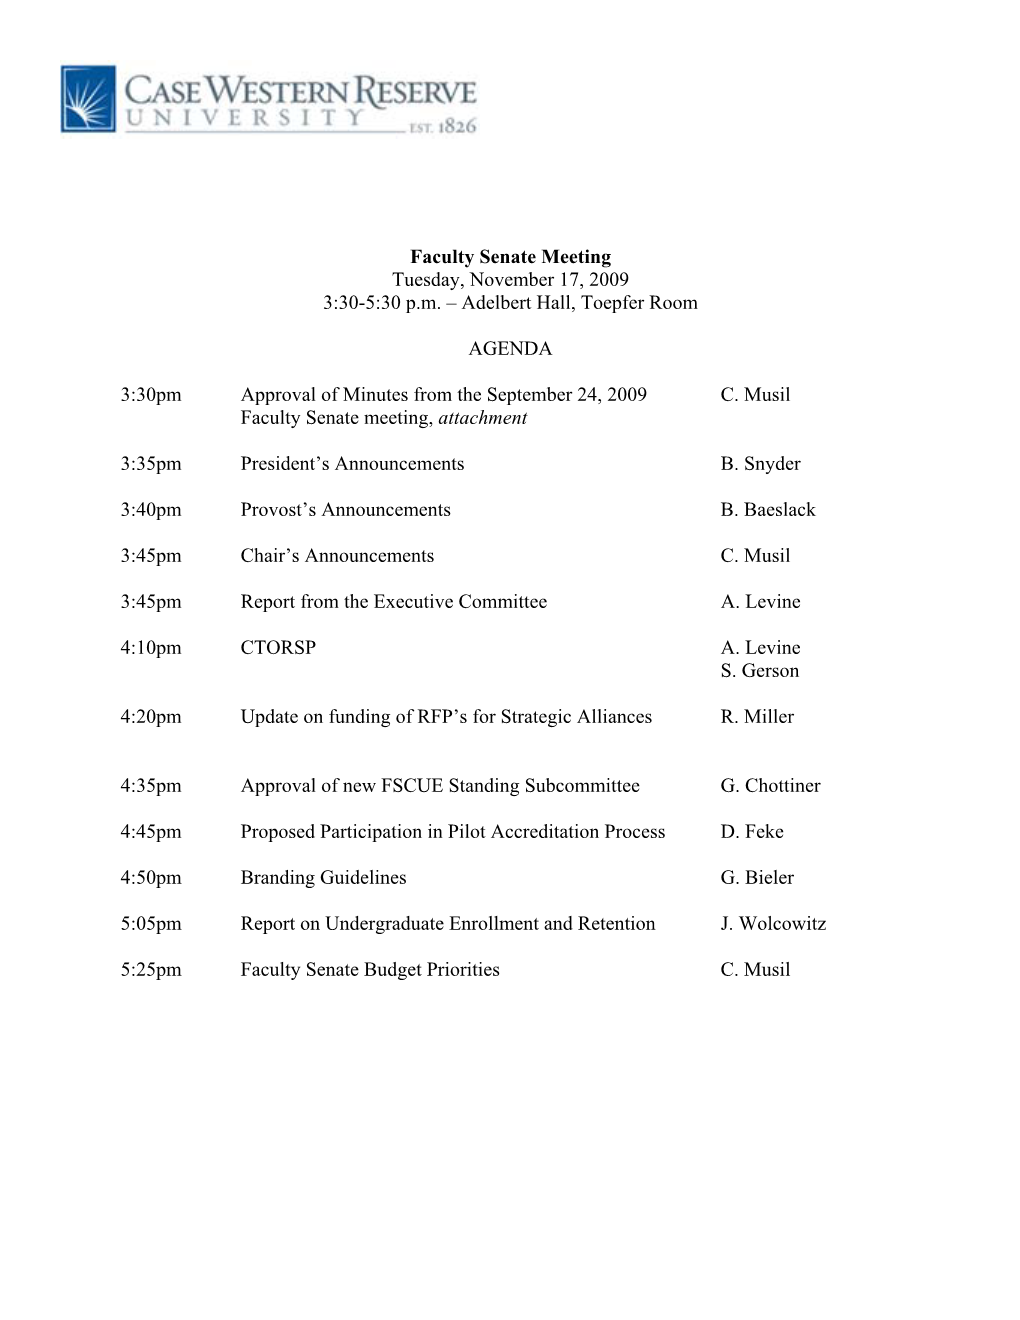 Faculty Senate Meeting Tuesday, November 17, 2009 3:30-5:30 Pm